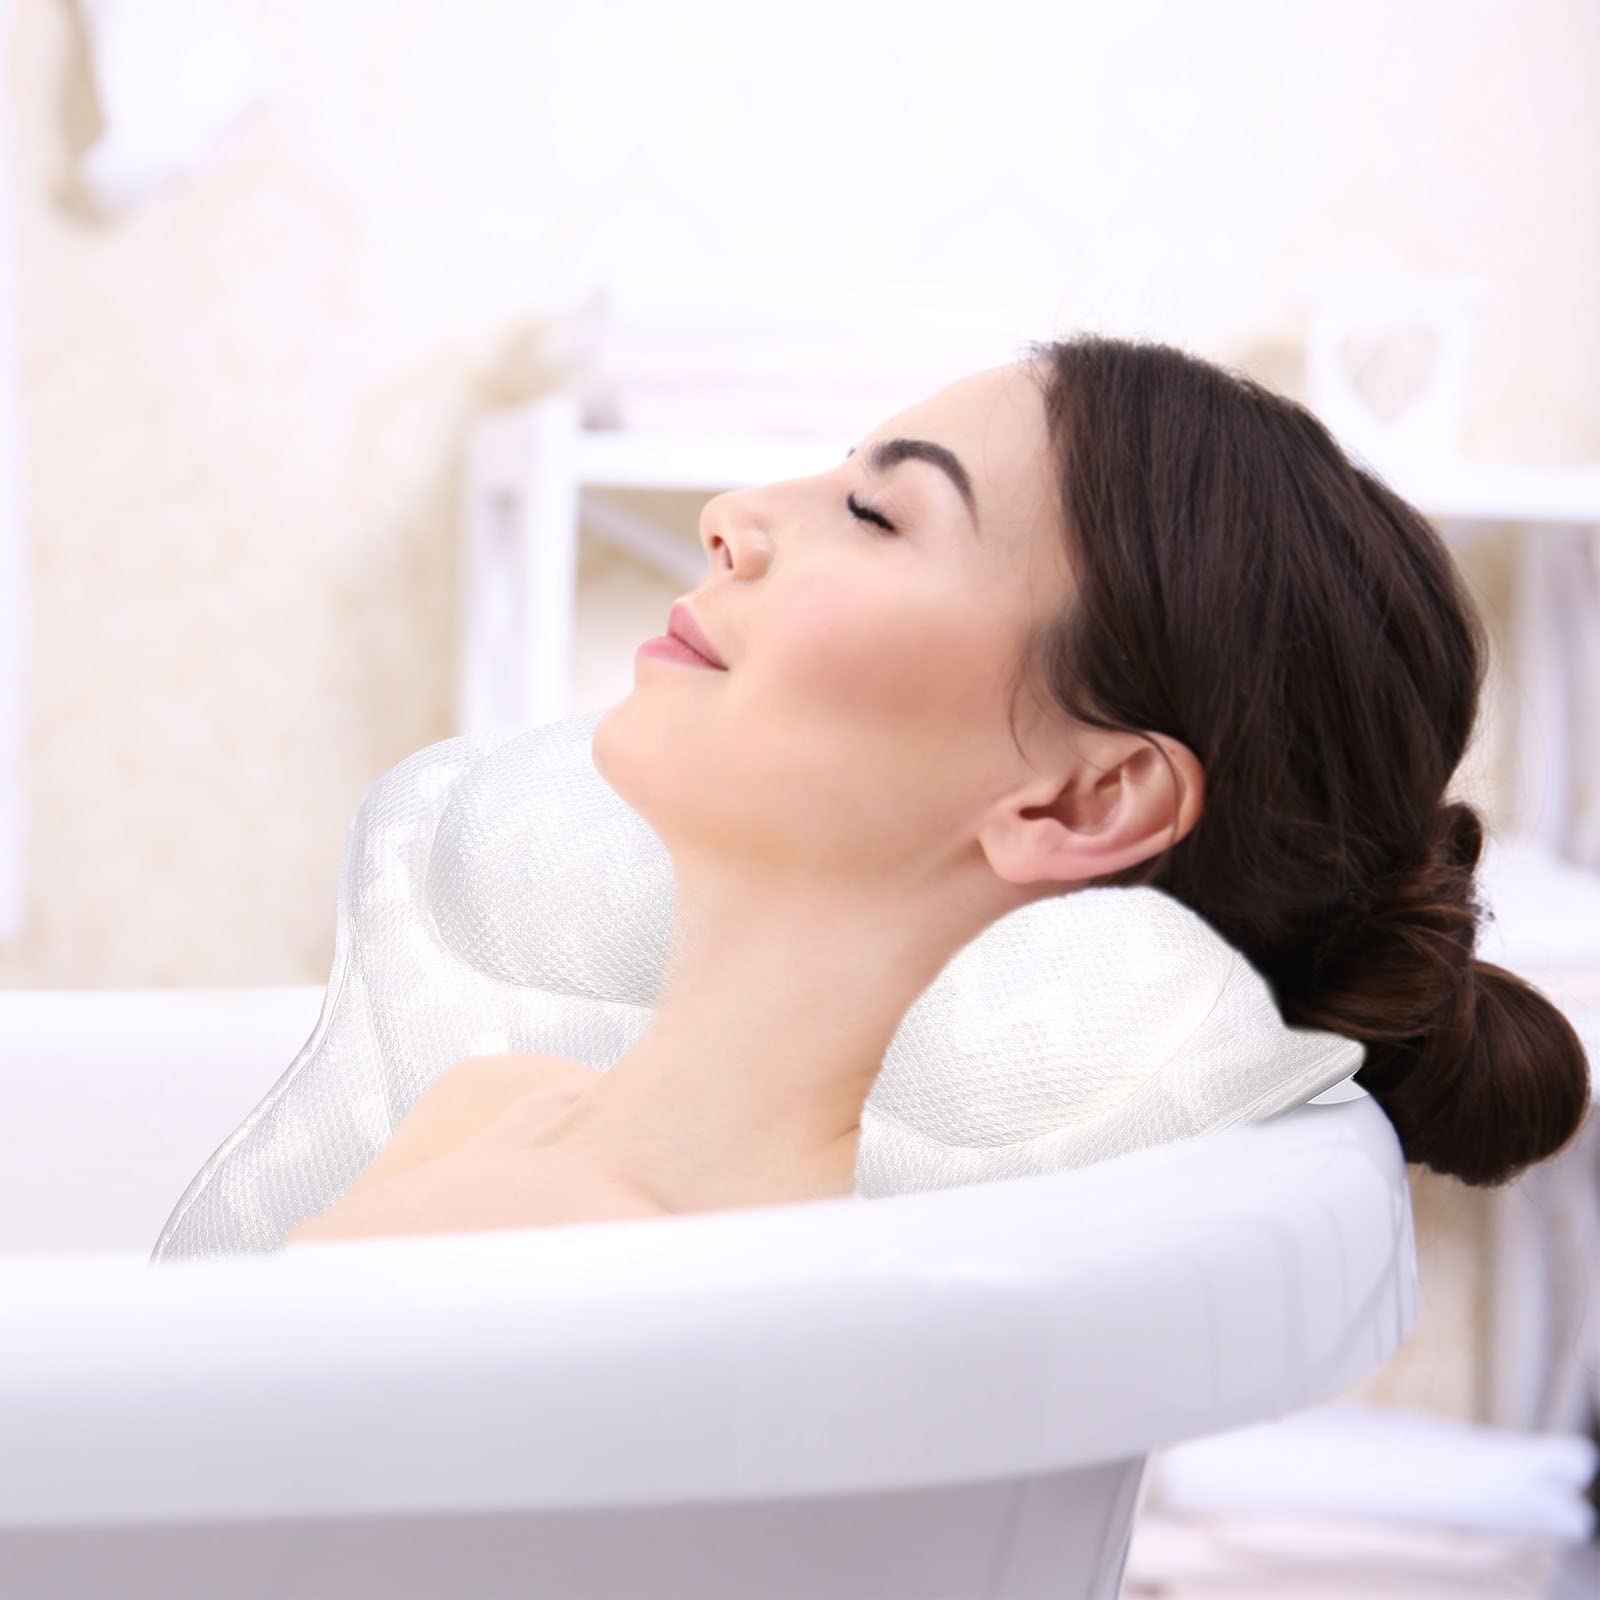  Bath Pillow (Ultra Soft), Luxury Bath Tub Pillow